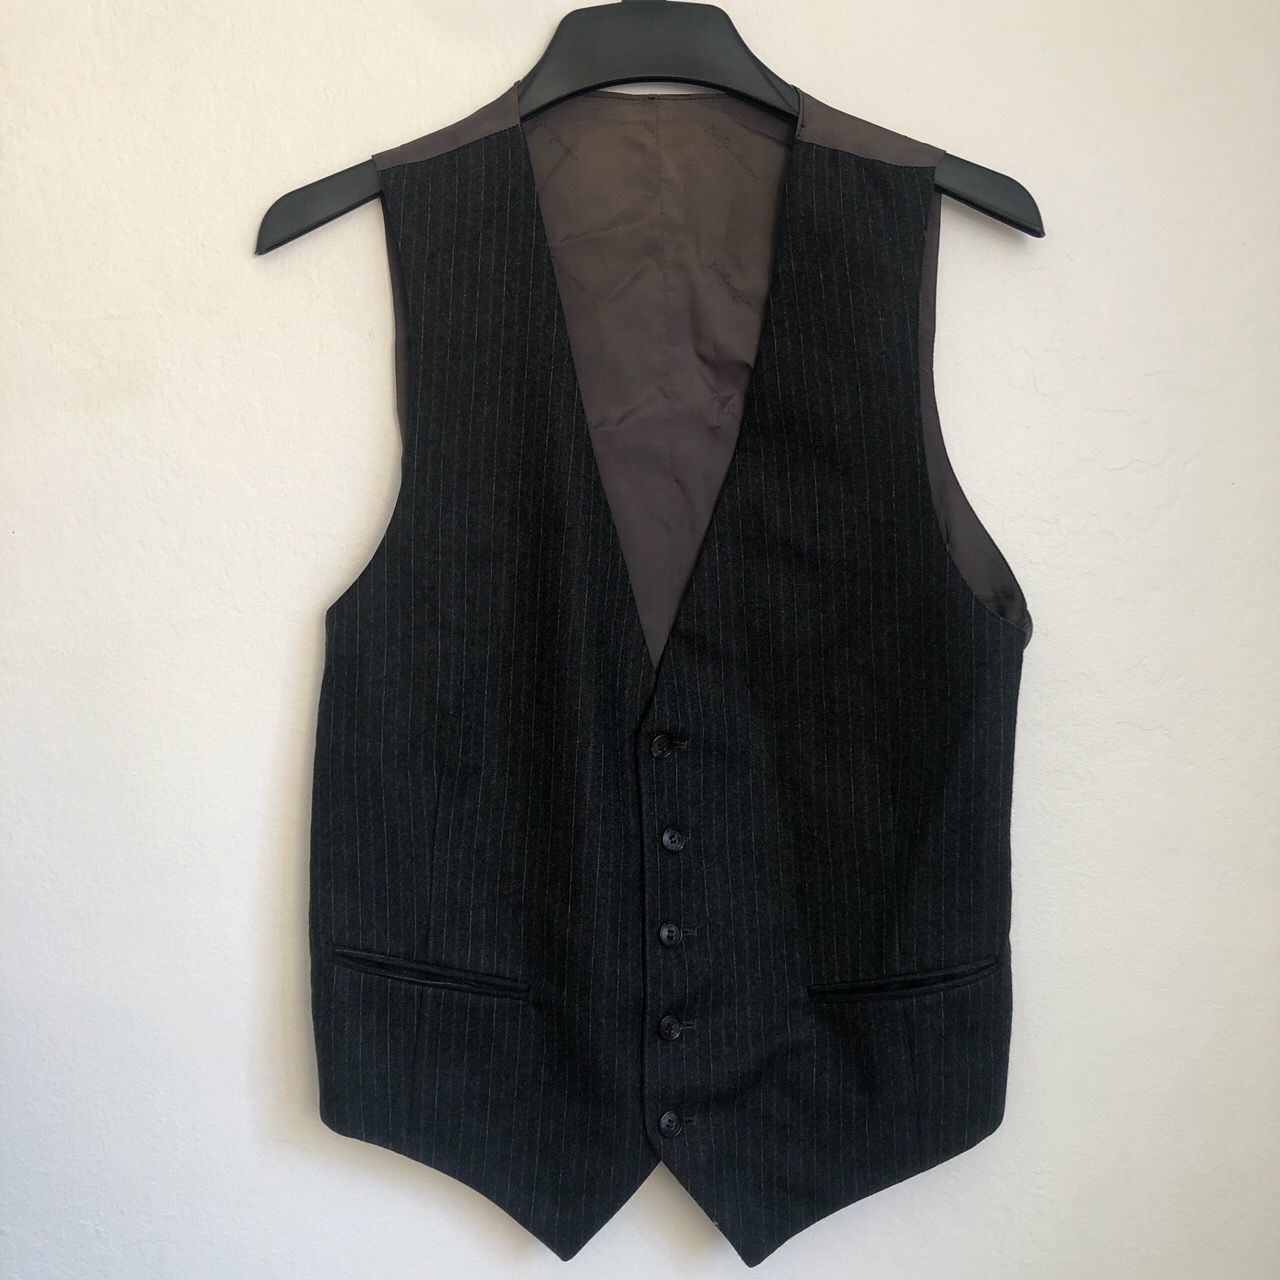 Yves Saint Laurent (YSL) Men’s vintage vest